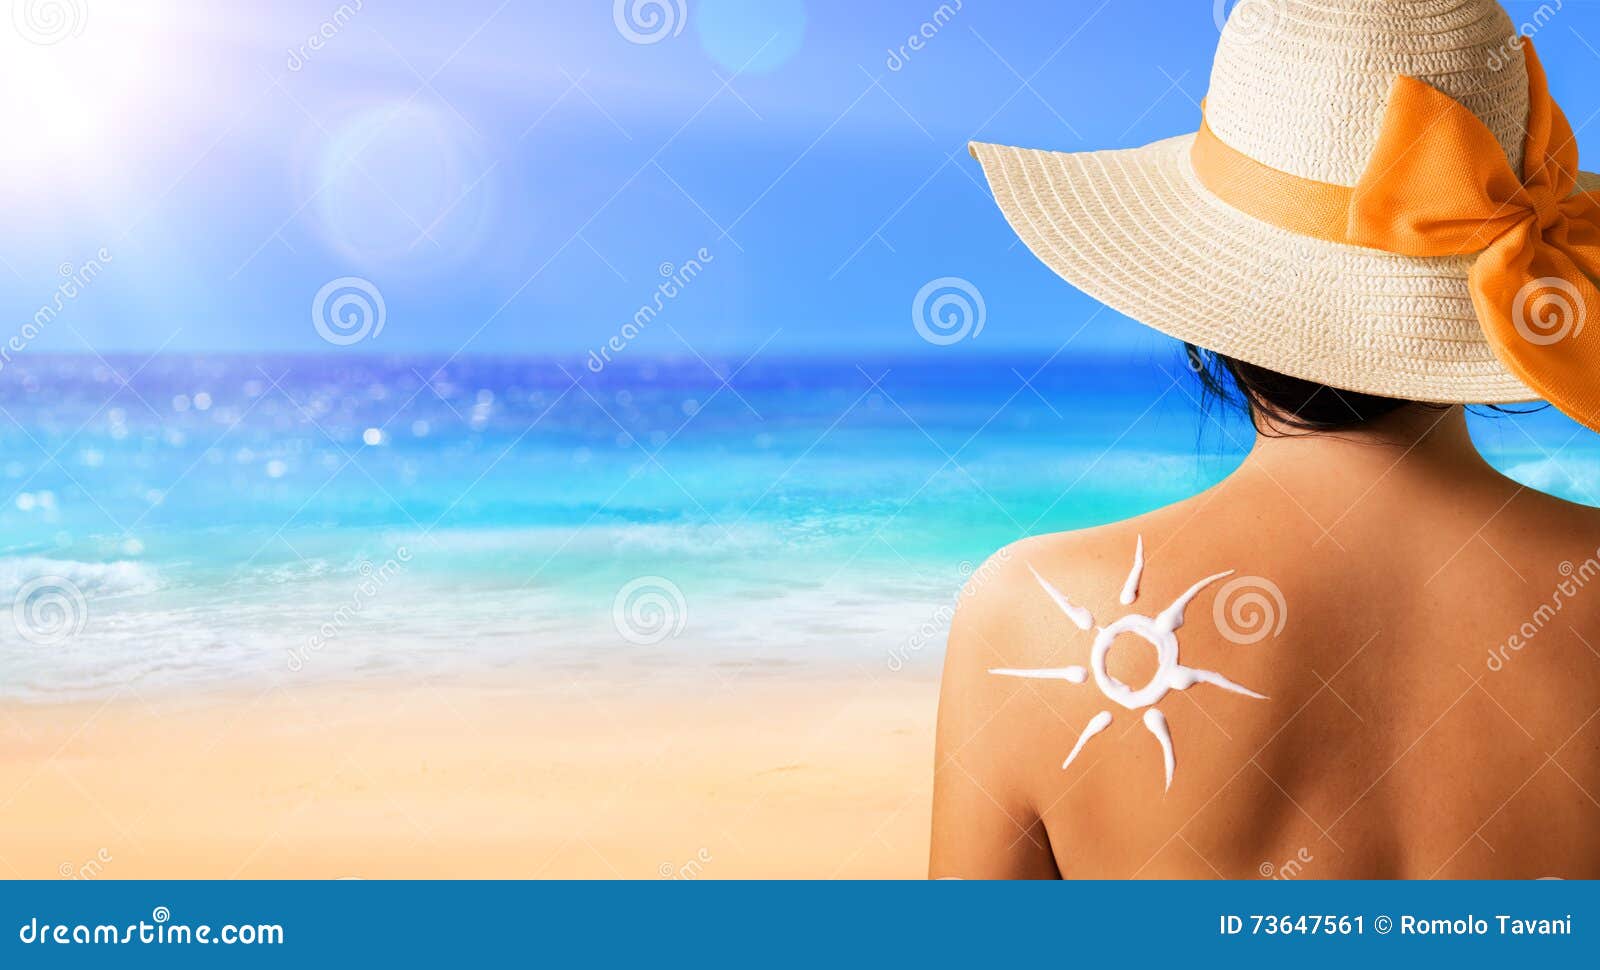 woman with suntan lotion